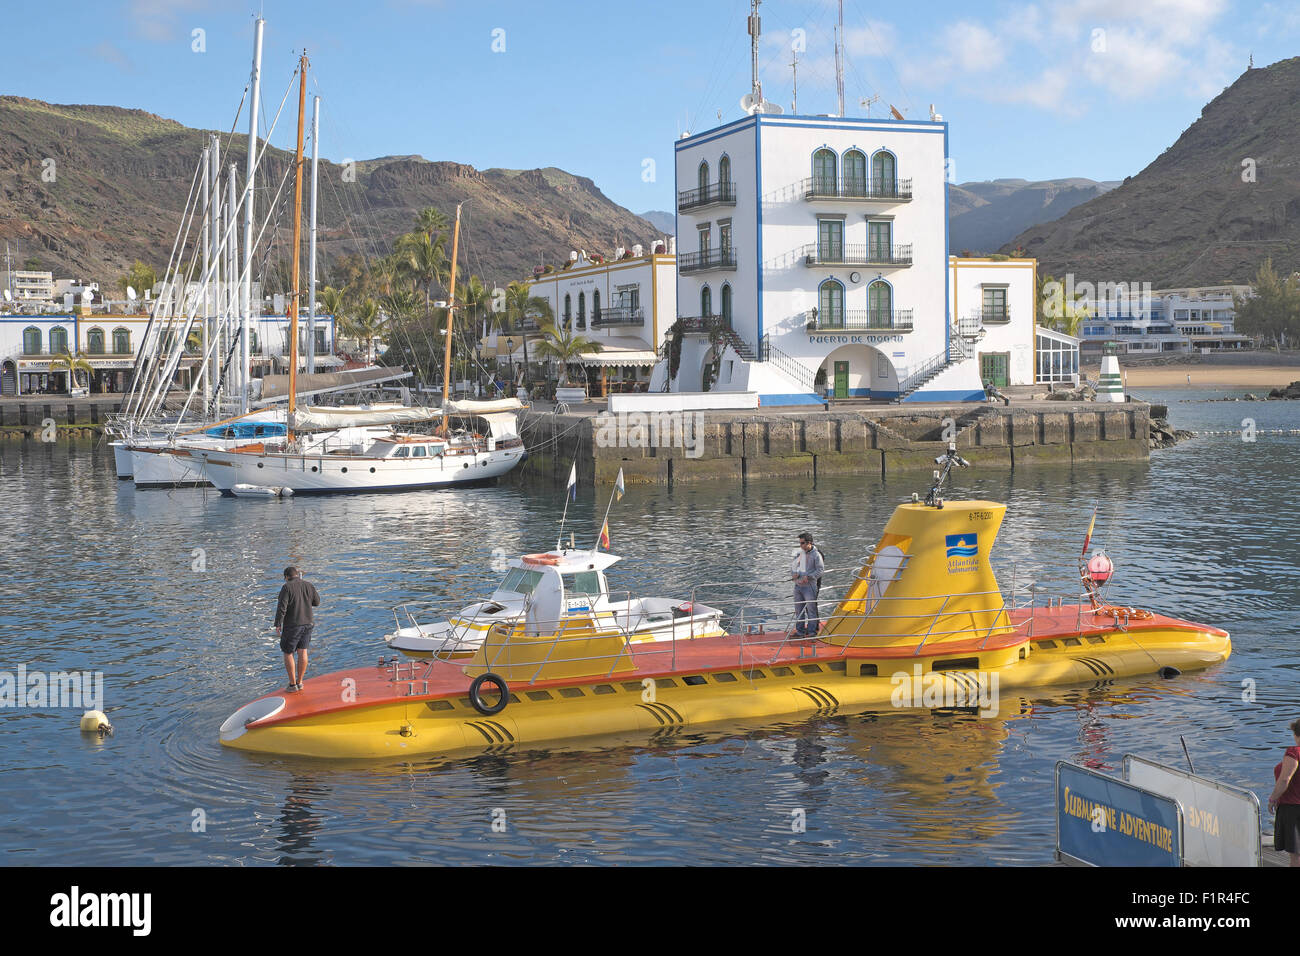 Semi submersible tourist boat, Pueto de Mogan, Gran Canaria, Canary Islands, Spain. Stock Photo